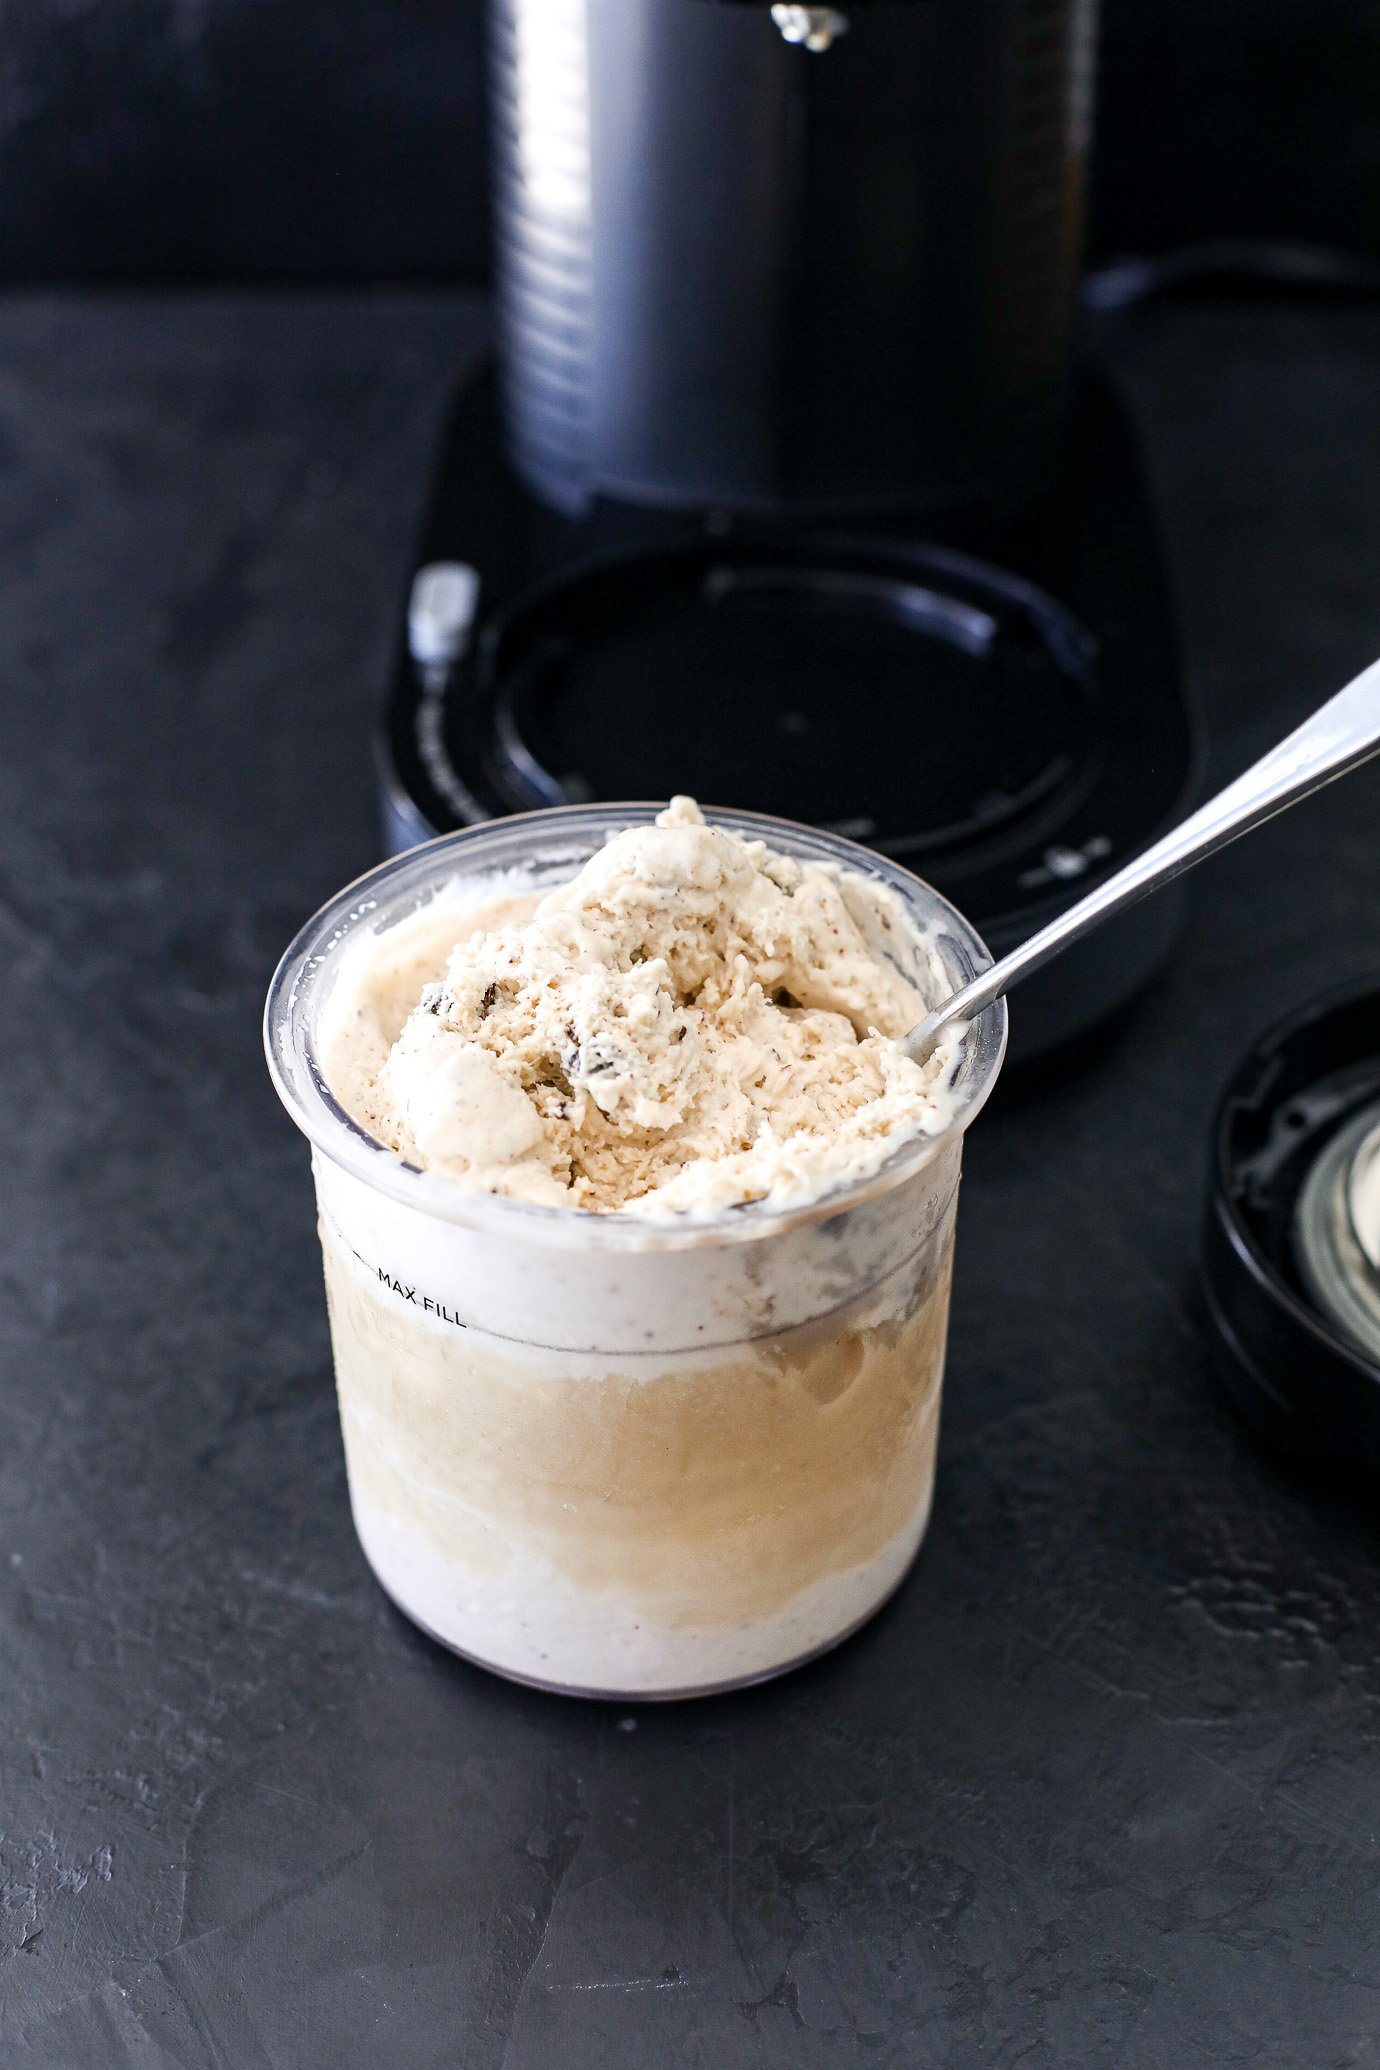 Protein Ice Cream Made with Ninja Creami – ChocZero